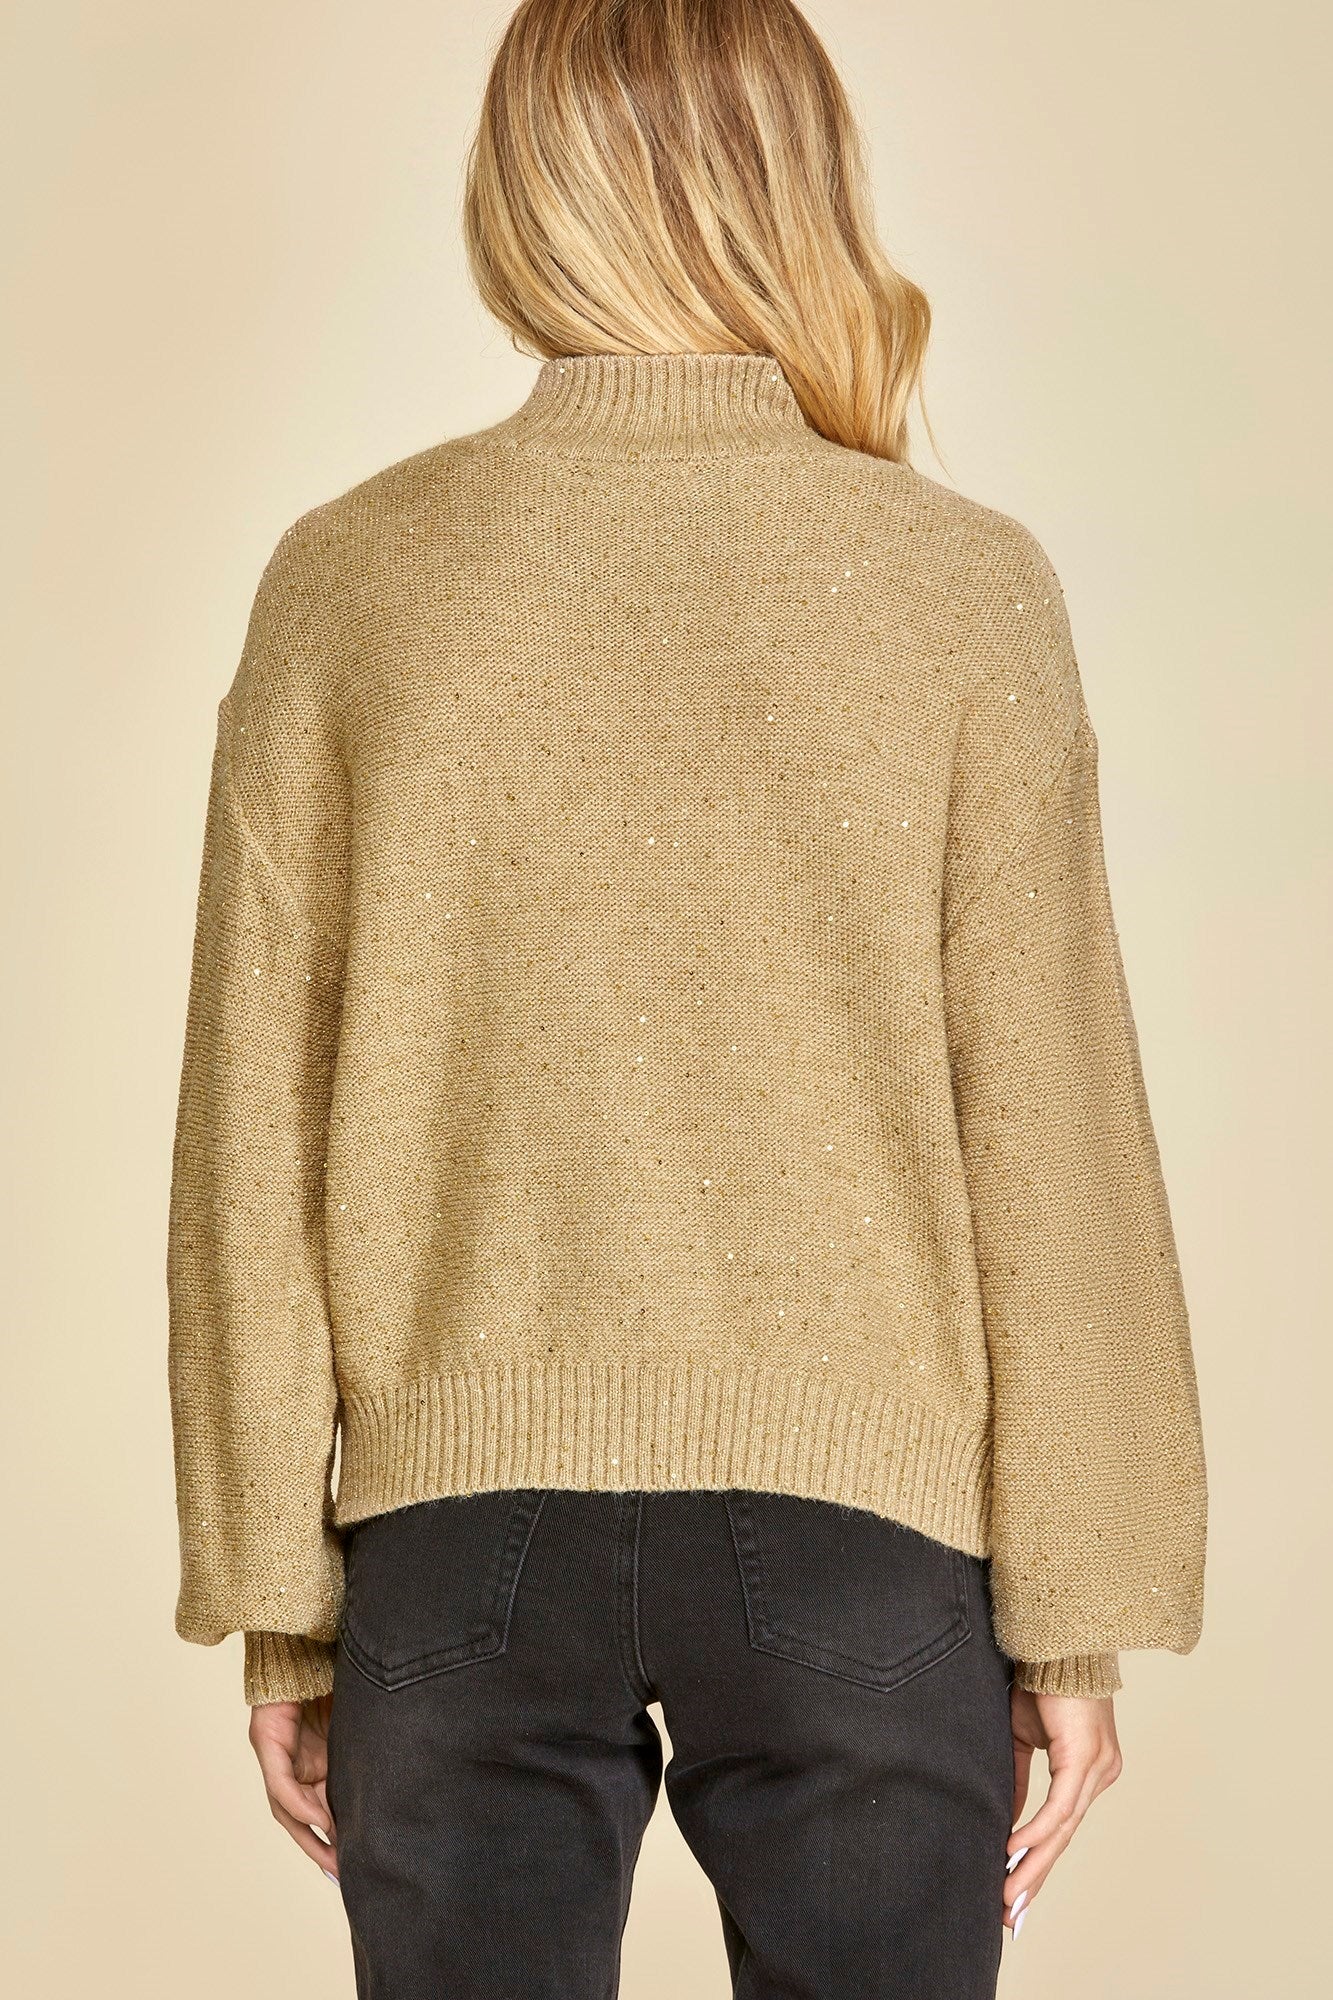 Sequin Lulex Sweater